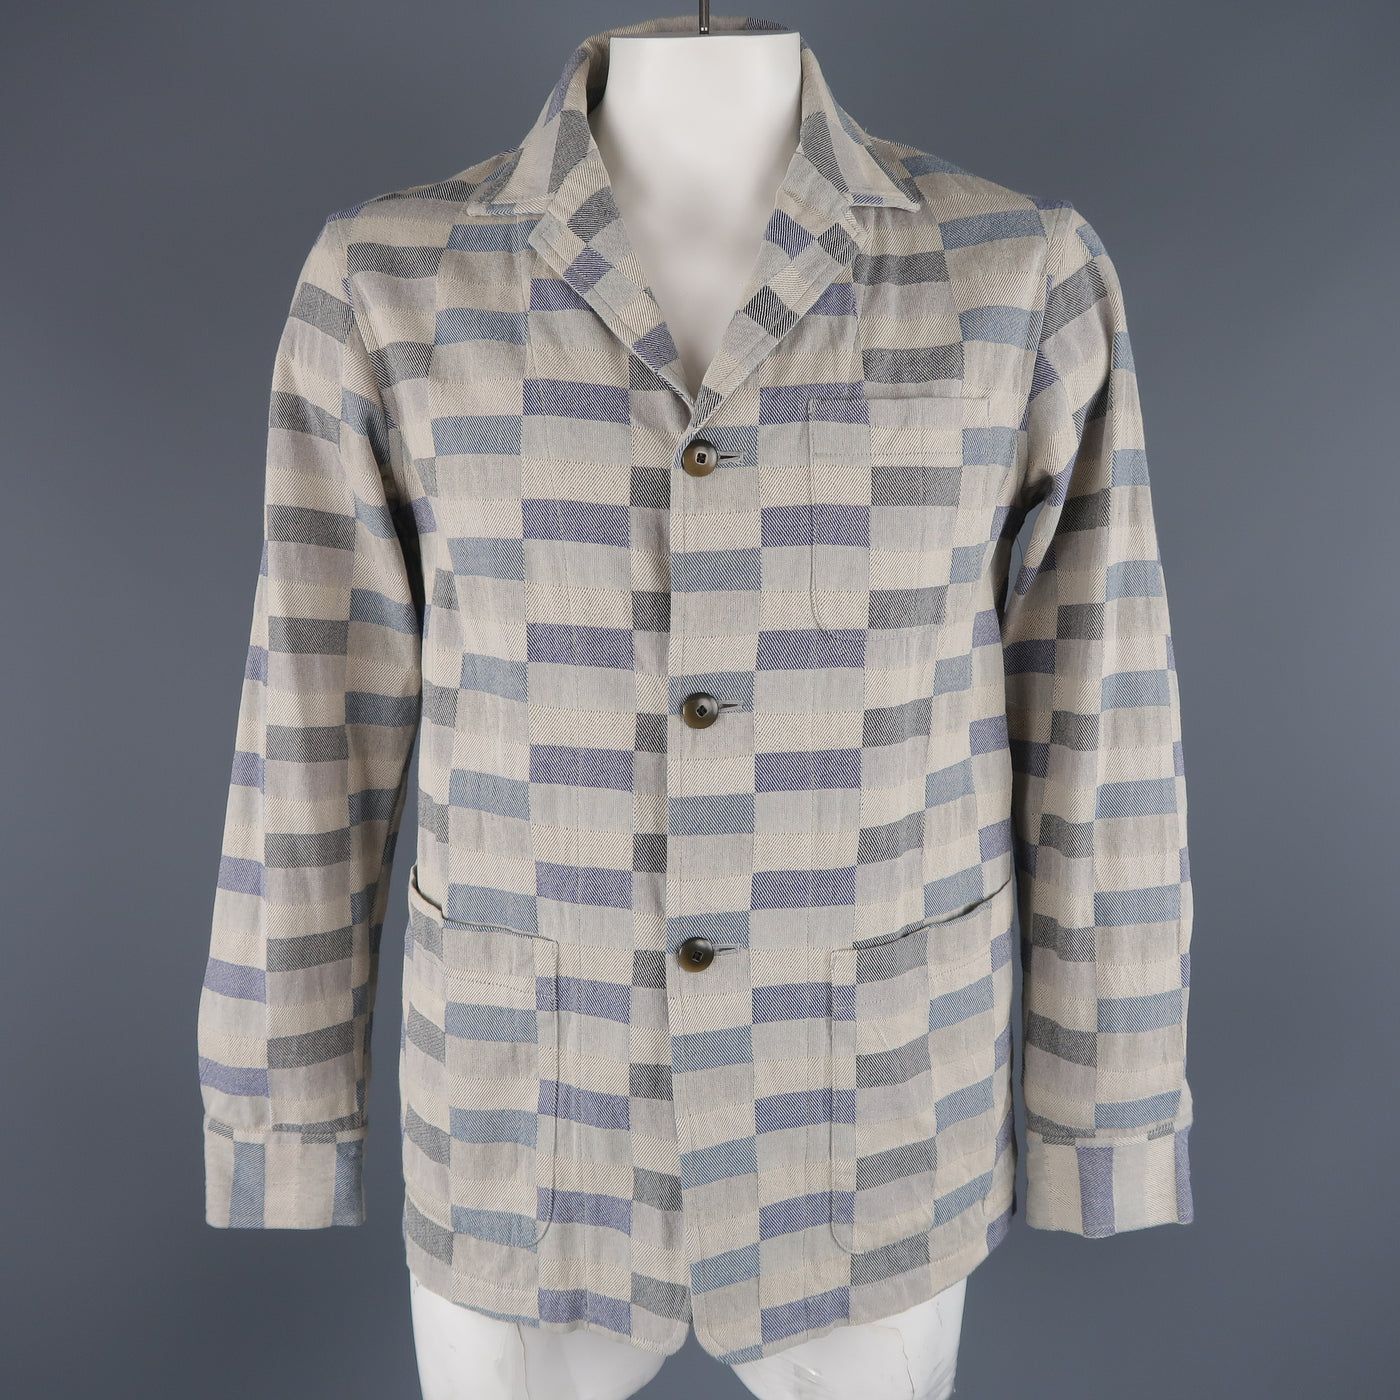 TS (S) L Grey & Navy Checkered Print Cotton Sport Coat Jacket